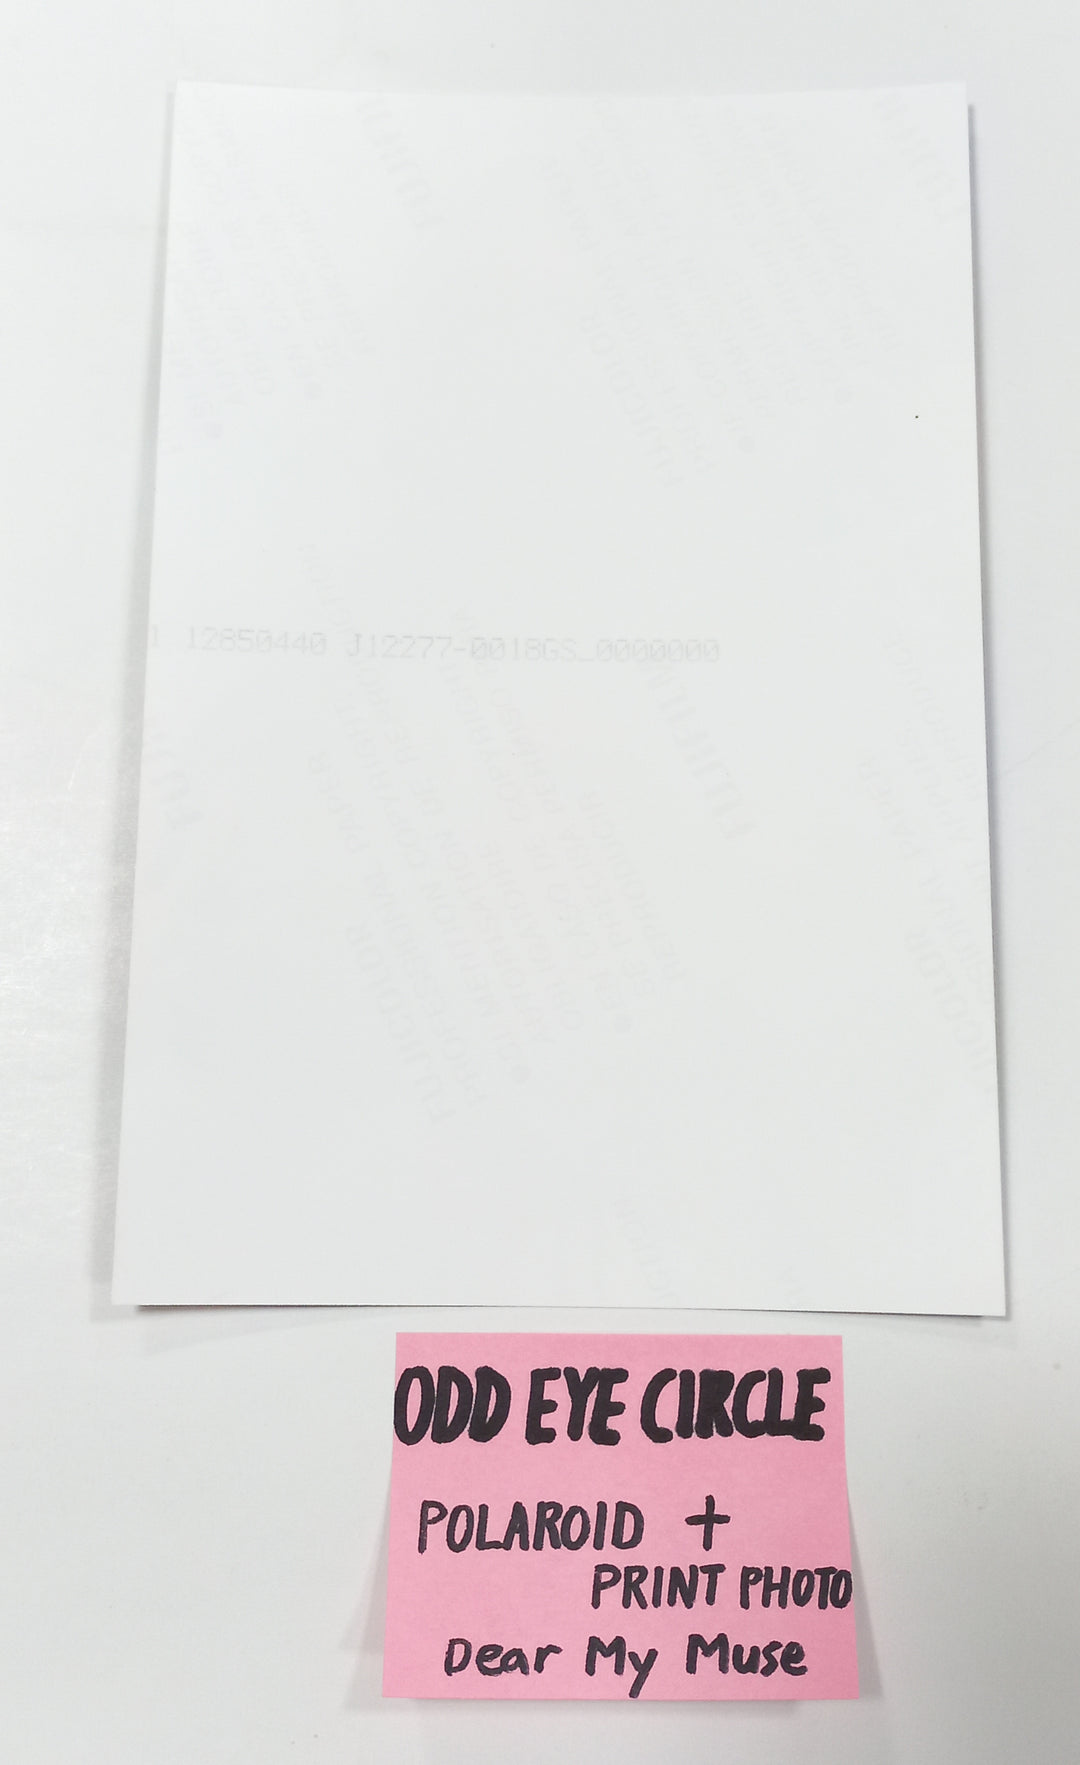 ODD EYE CIRCLE「バージョンアップ」 - 直筆サイン入りポラロイド + プリント写真 [23.09.25]